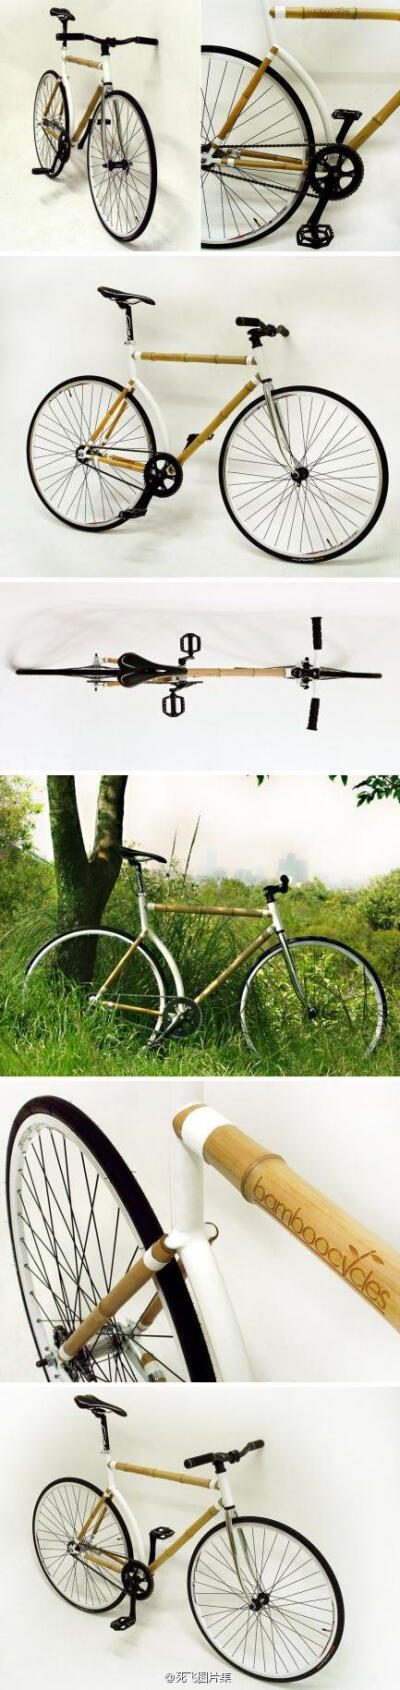 竹子死飞车 bamboo cycles